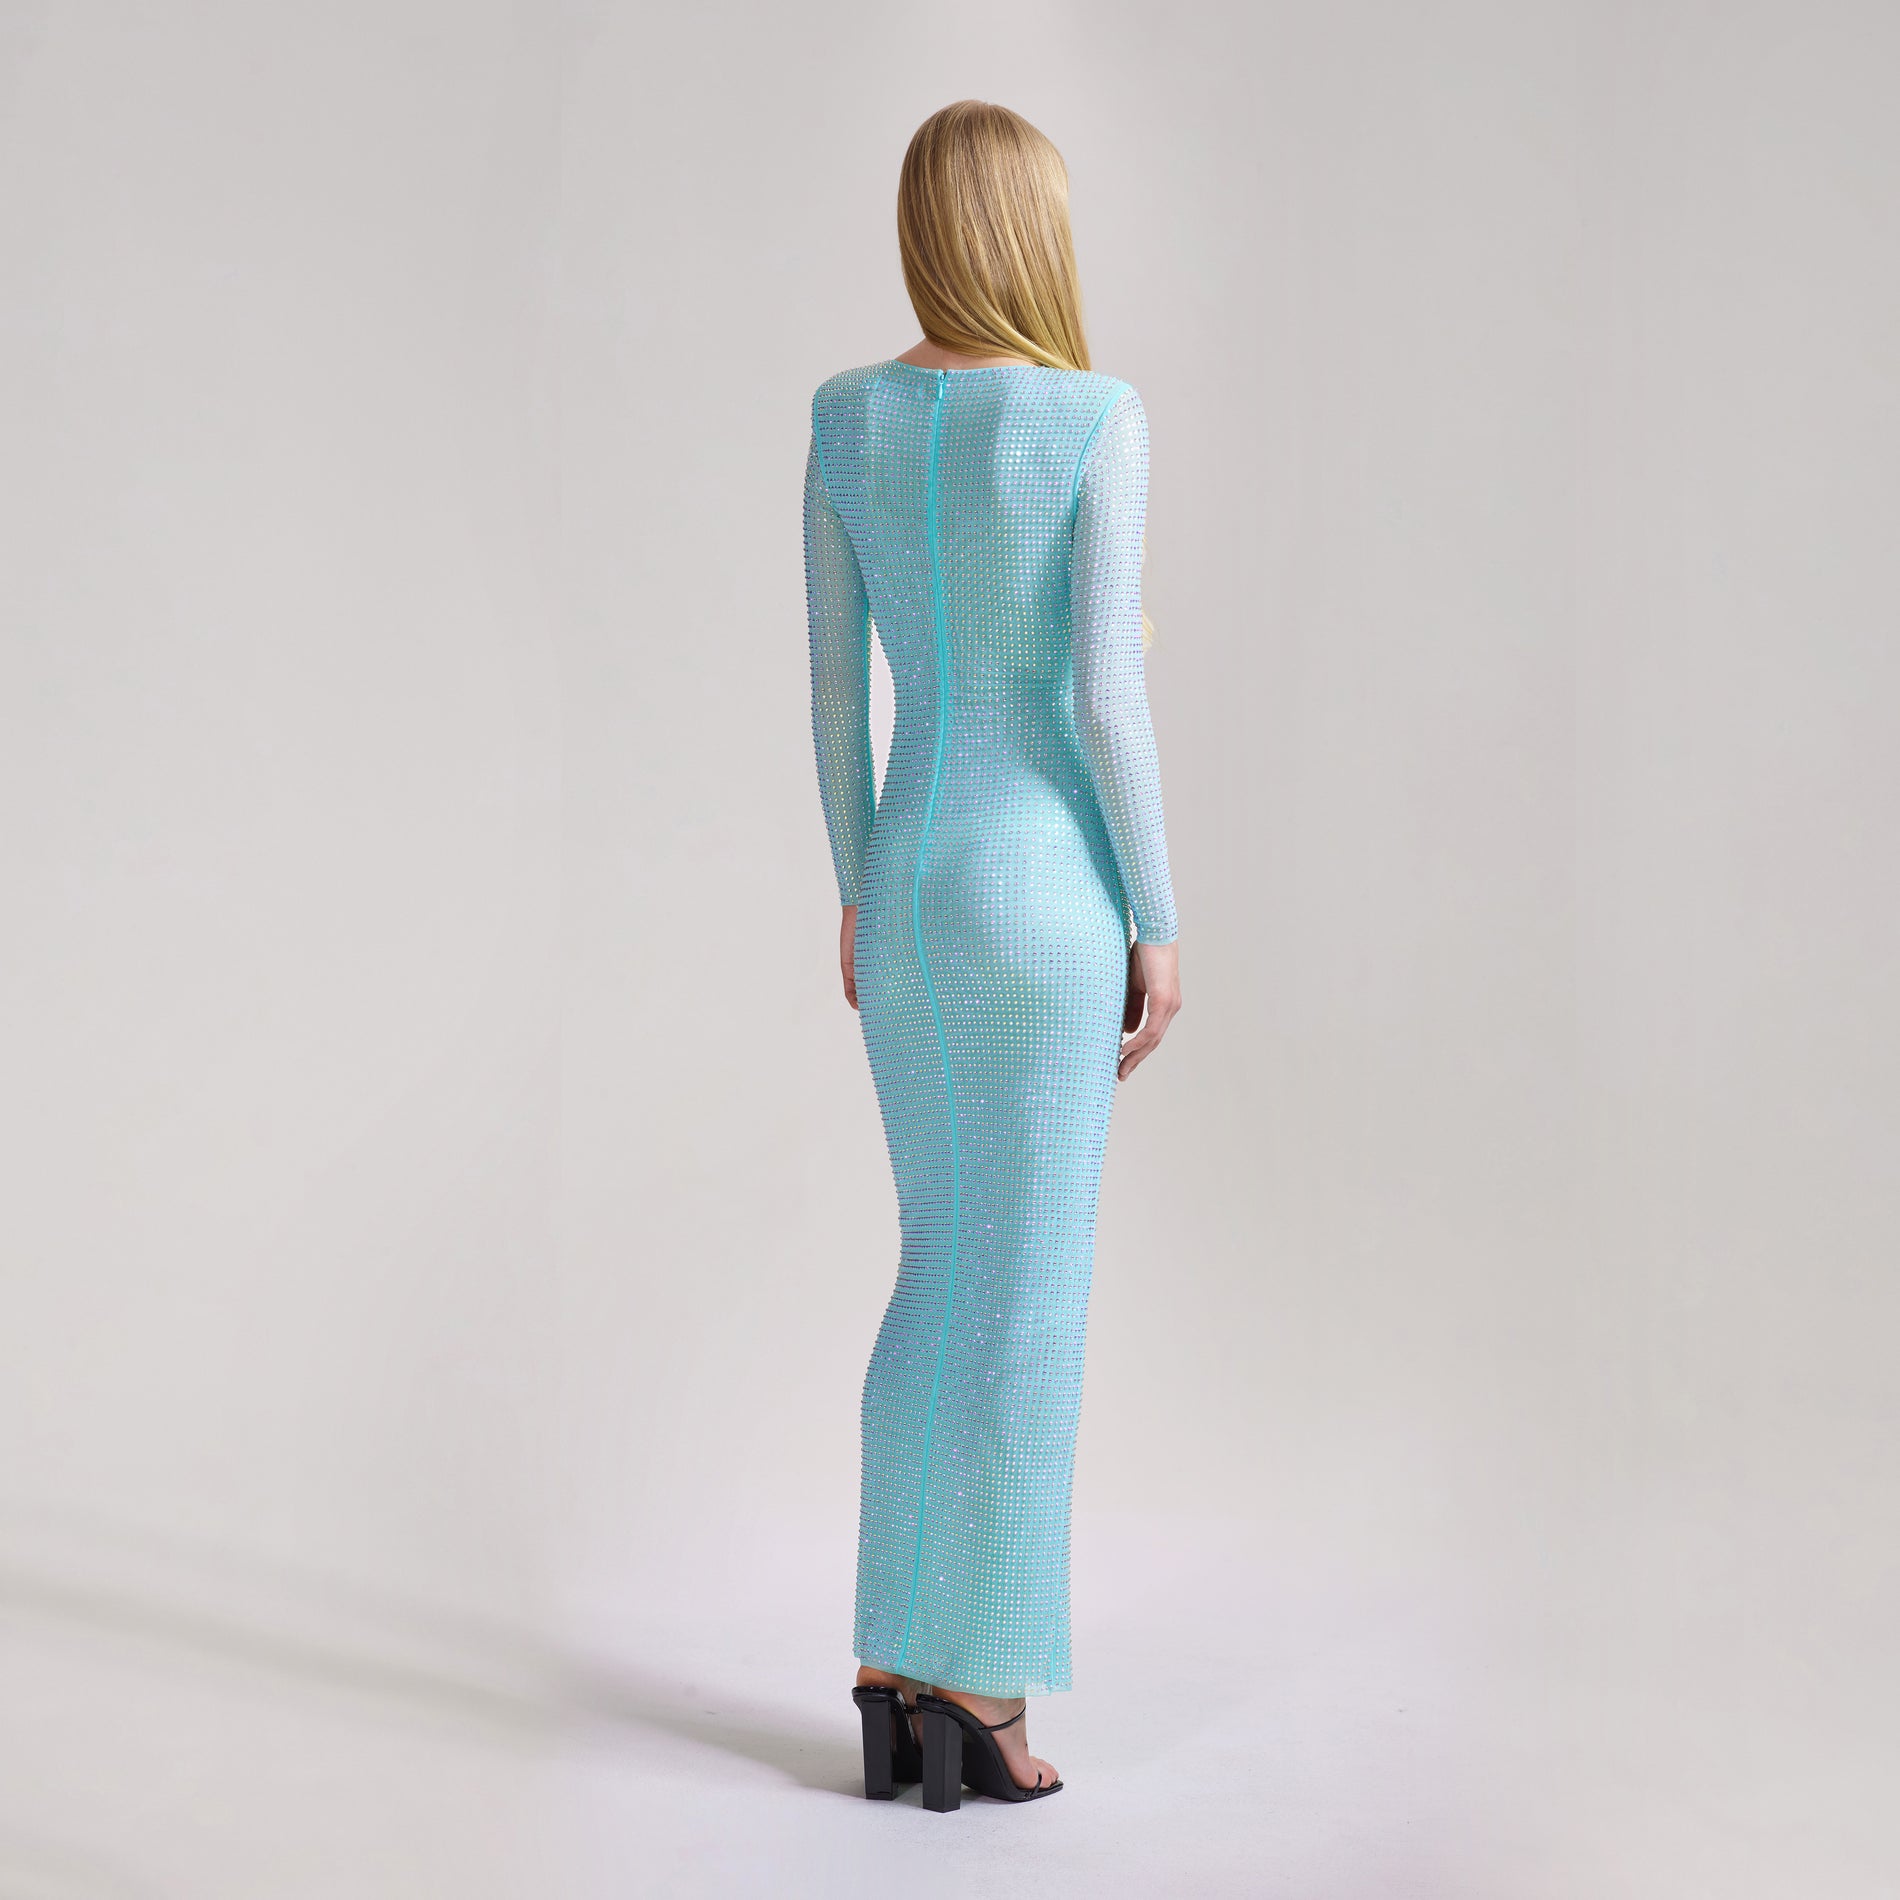 A woman wearing the Pale Blue Rhinestone Mesh Maxi Dress